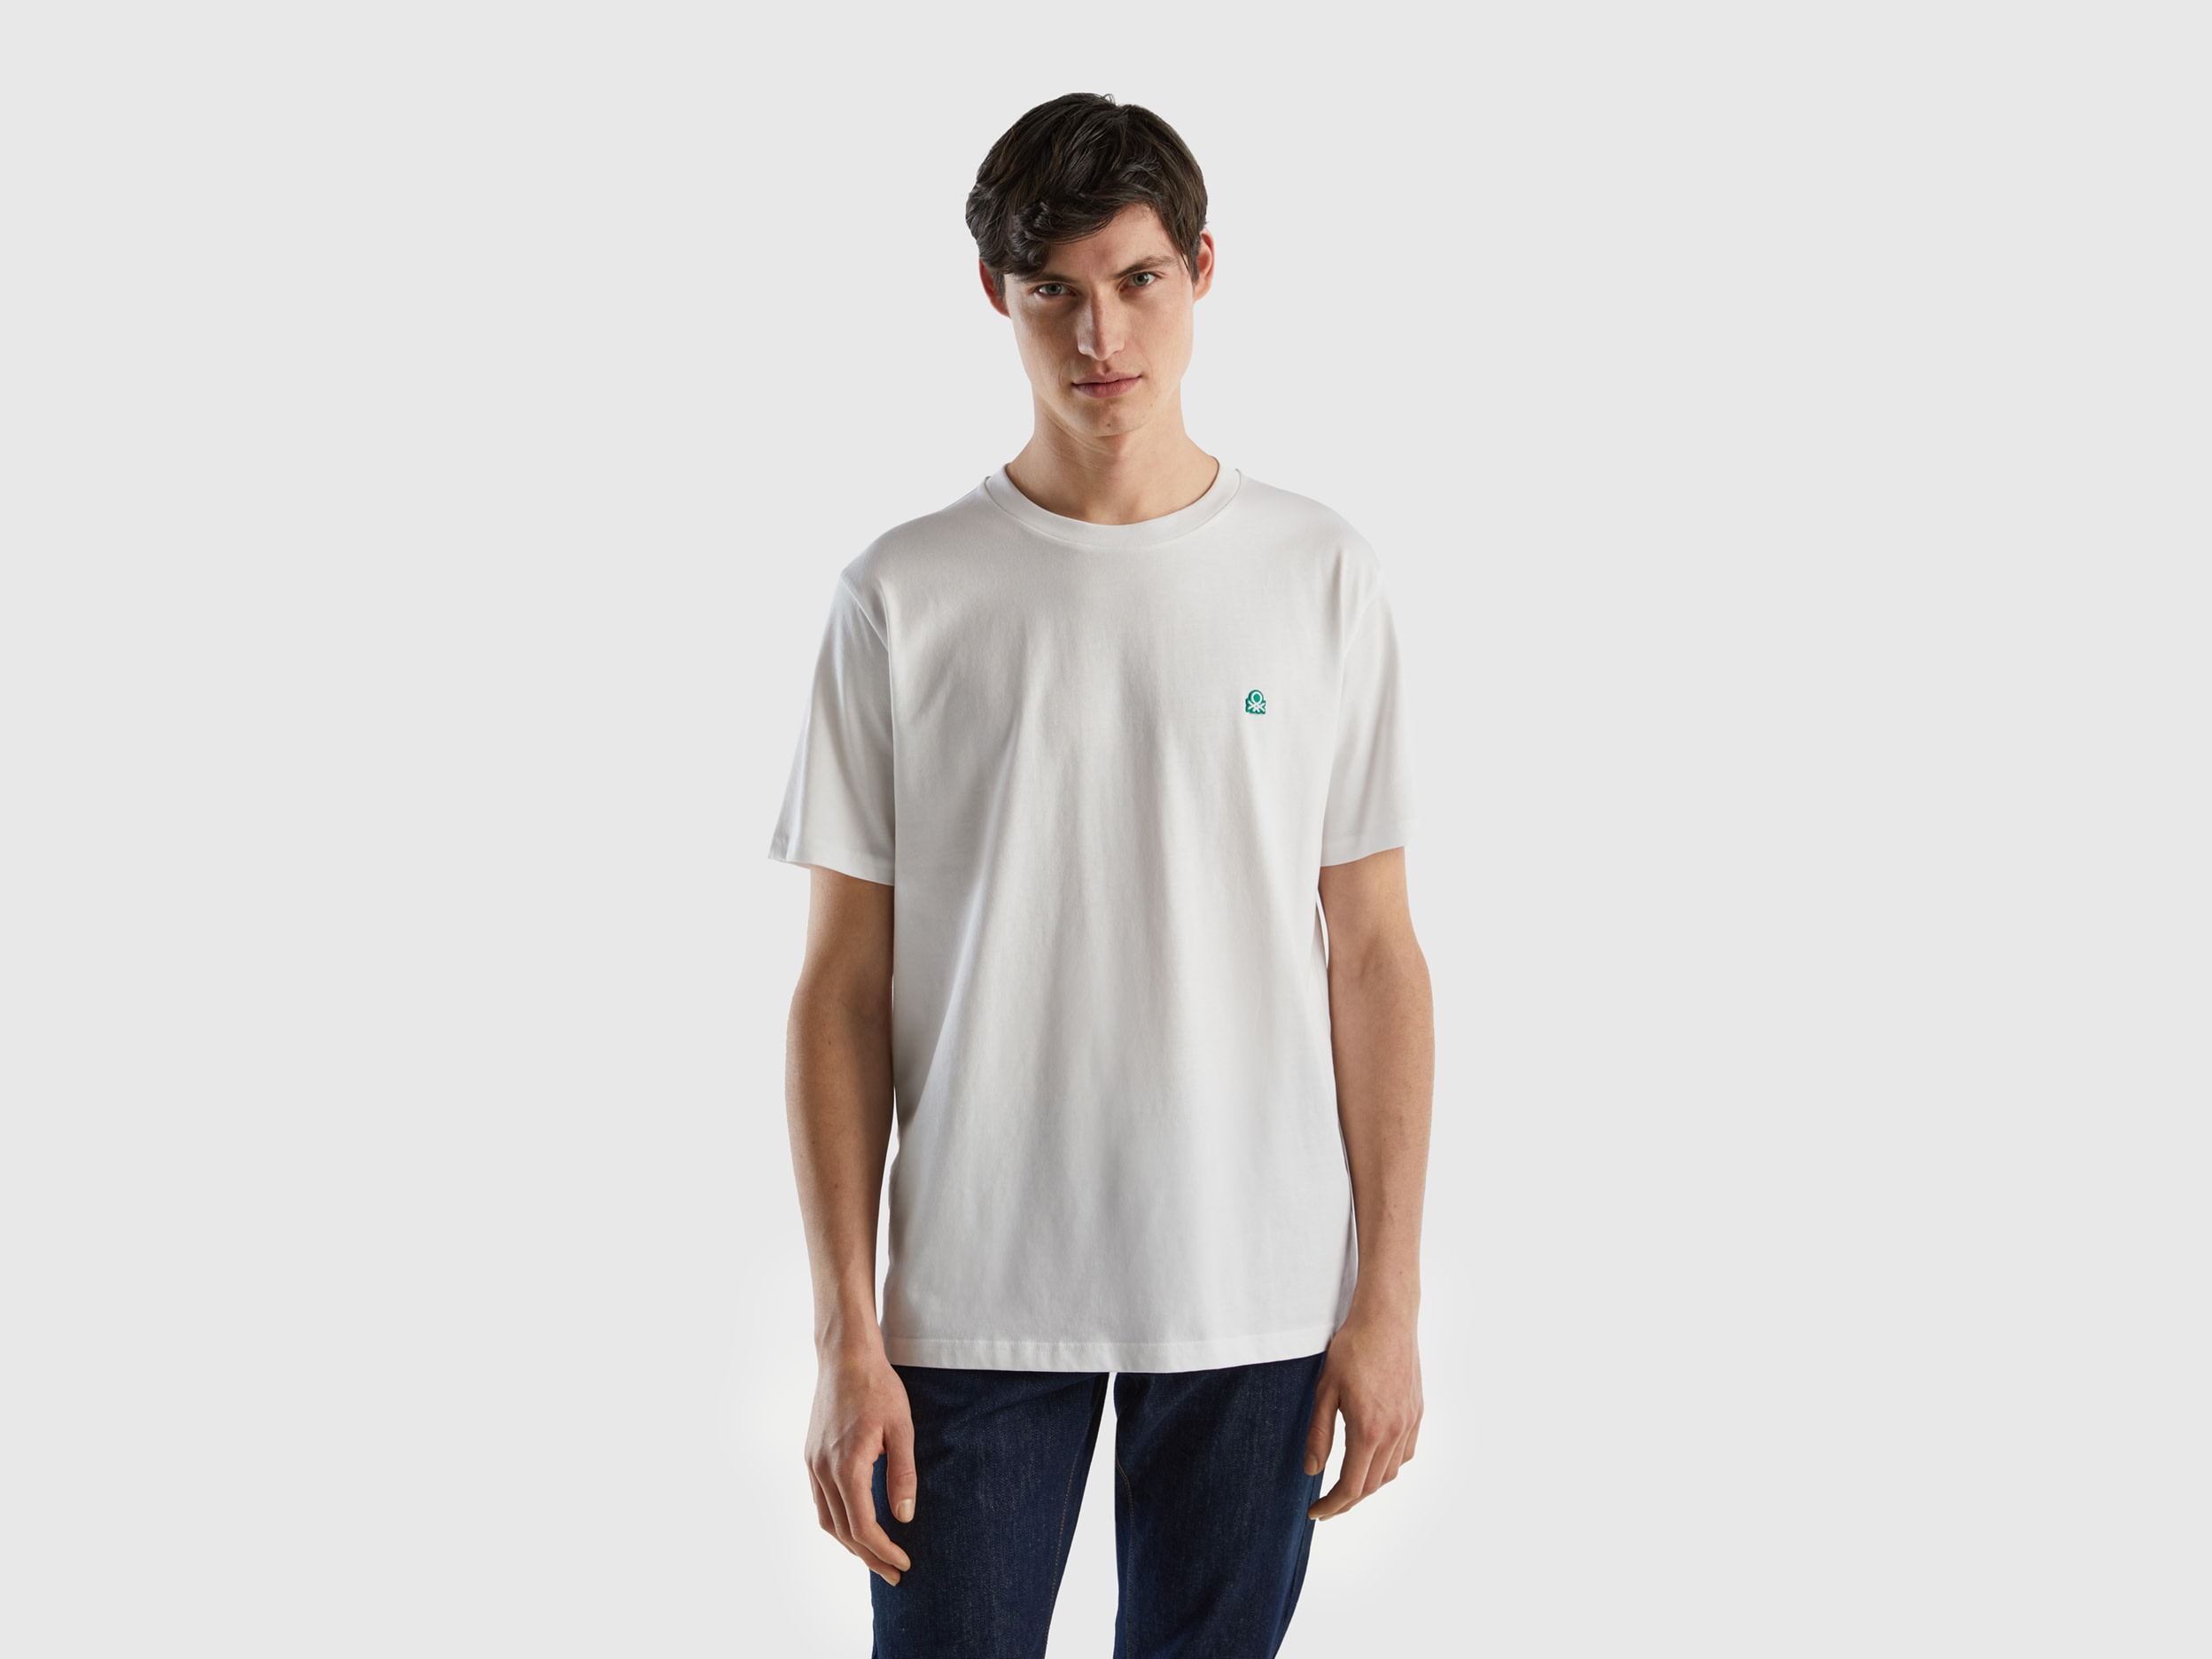 Benetton, 100% Organic Cotton Basic T-shirt, size XXL, White, Men